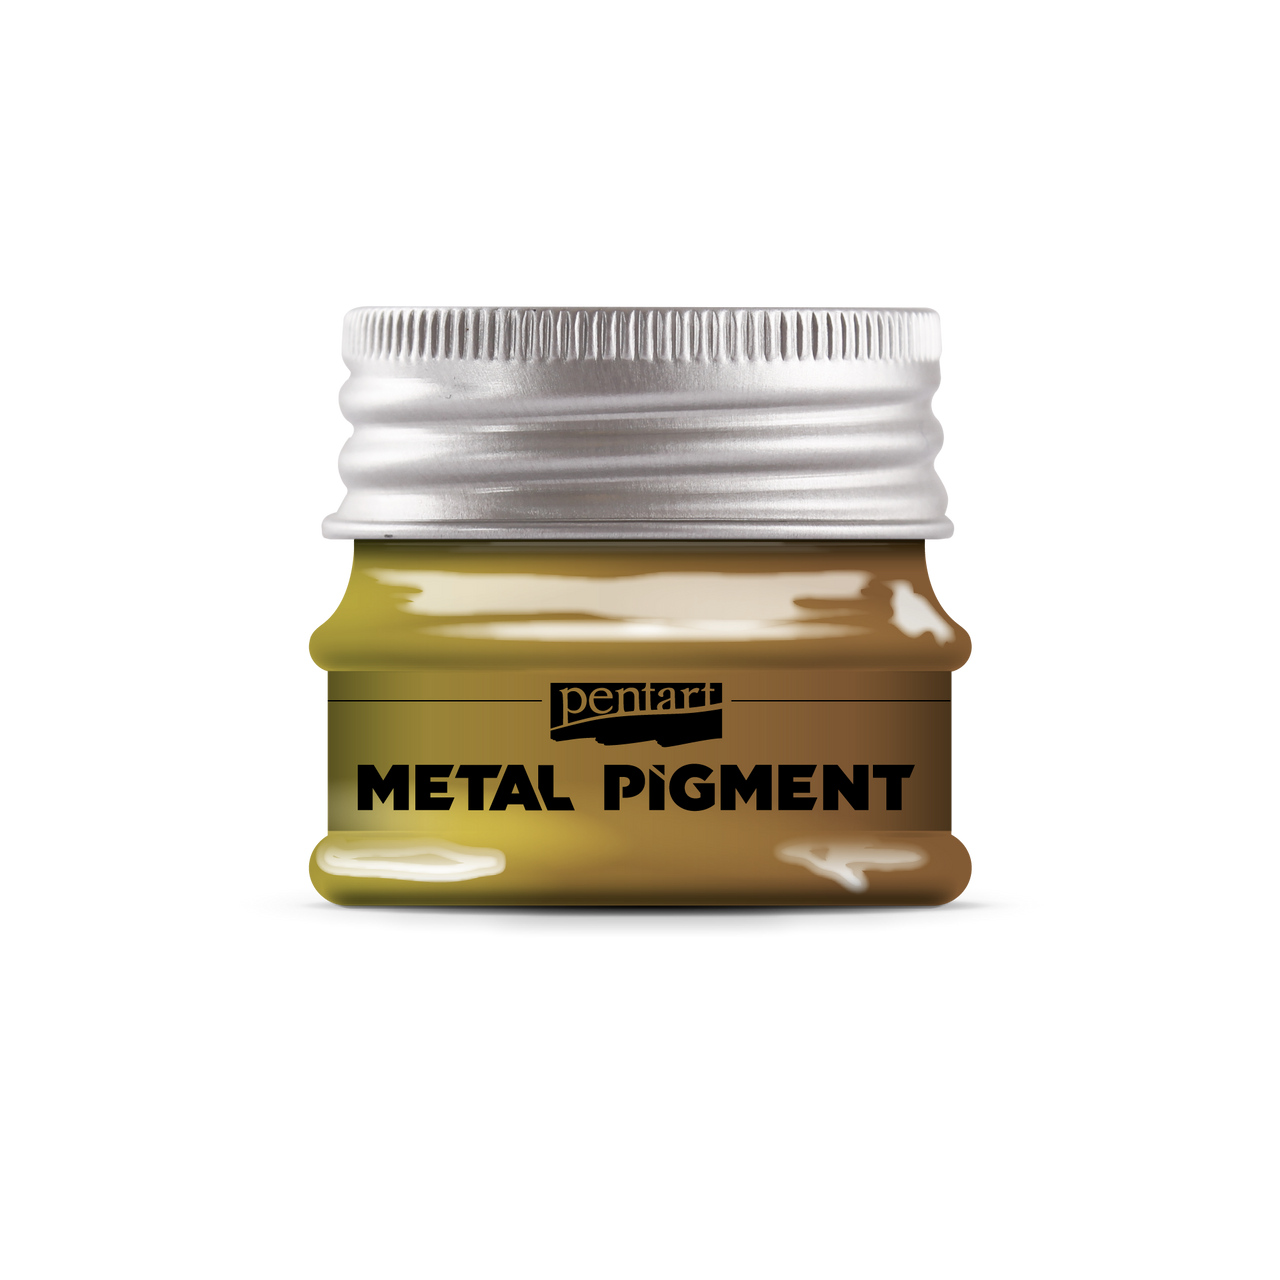 Metal Pigment - Pentart